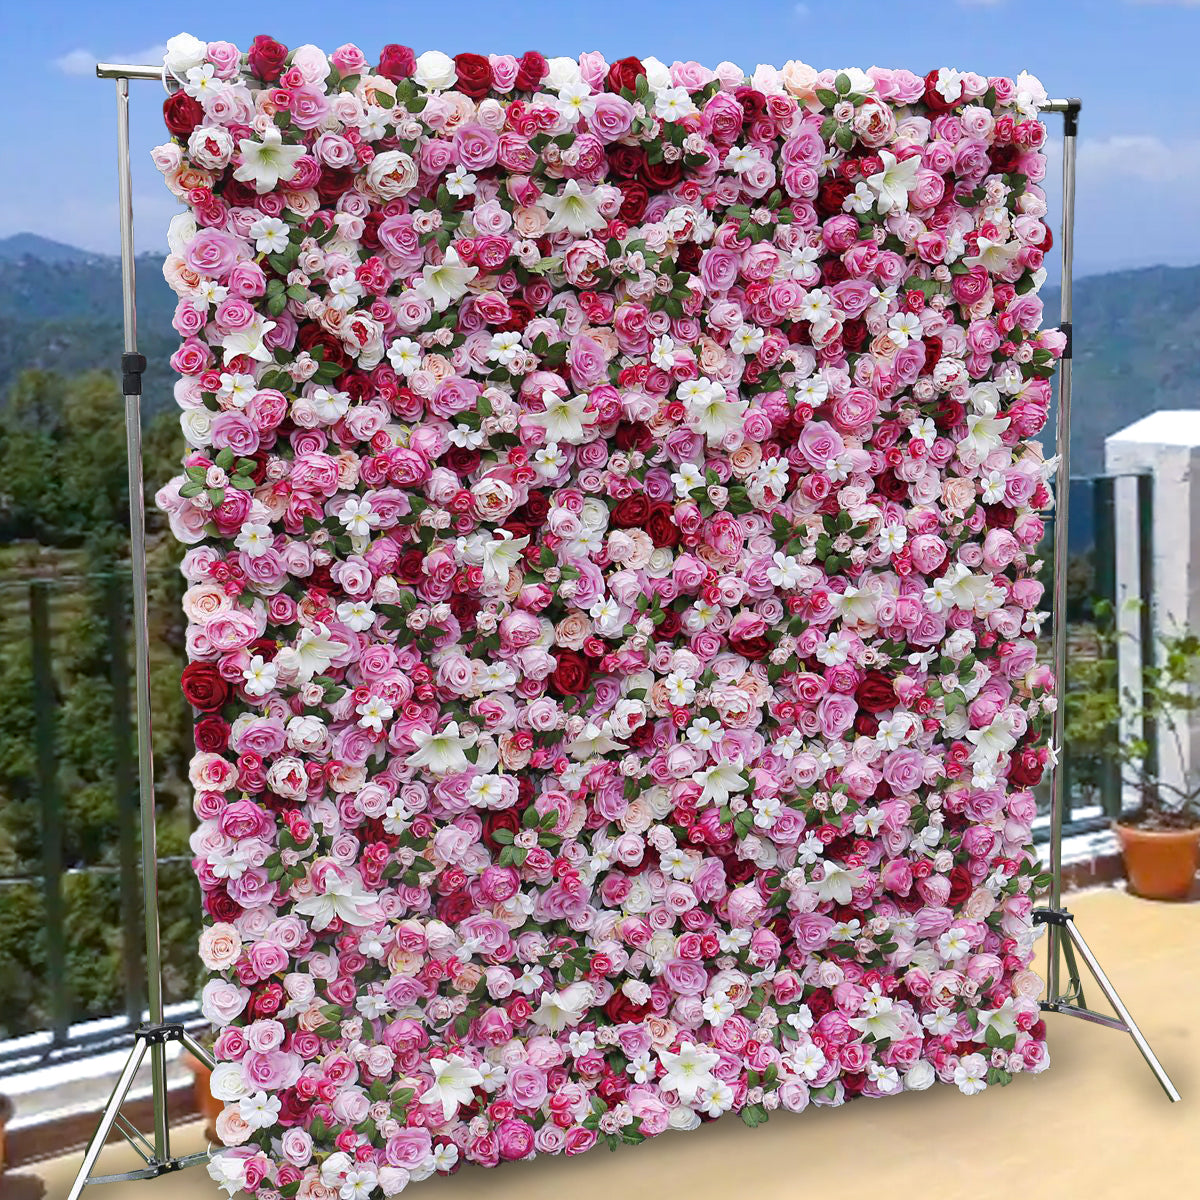 3D Artificial Flower Wall Arrangement Wedding Party Birthday Backdrop Decor HQ9033